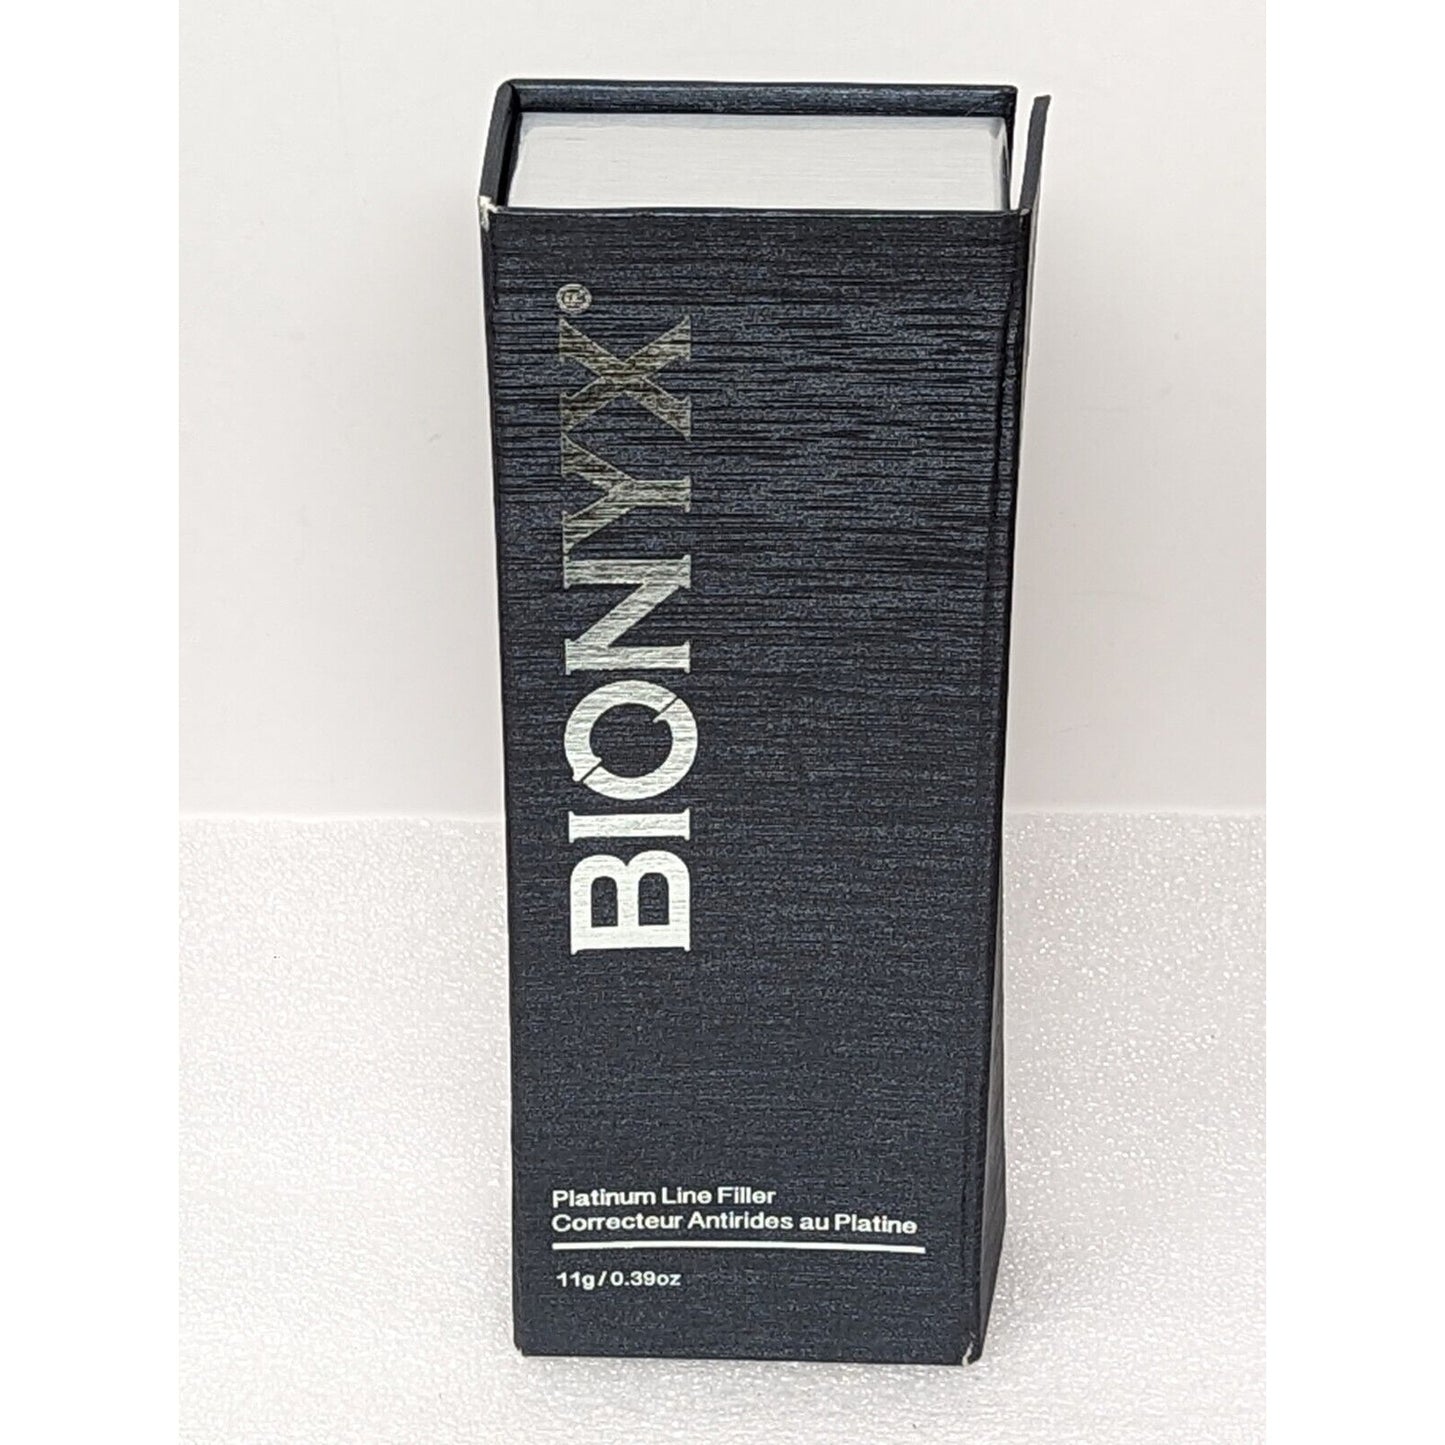 Bionyx Platinum Line Filler Size: 11 g / 0.39oz - Anti-Aging Products